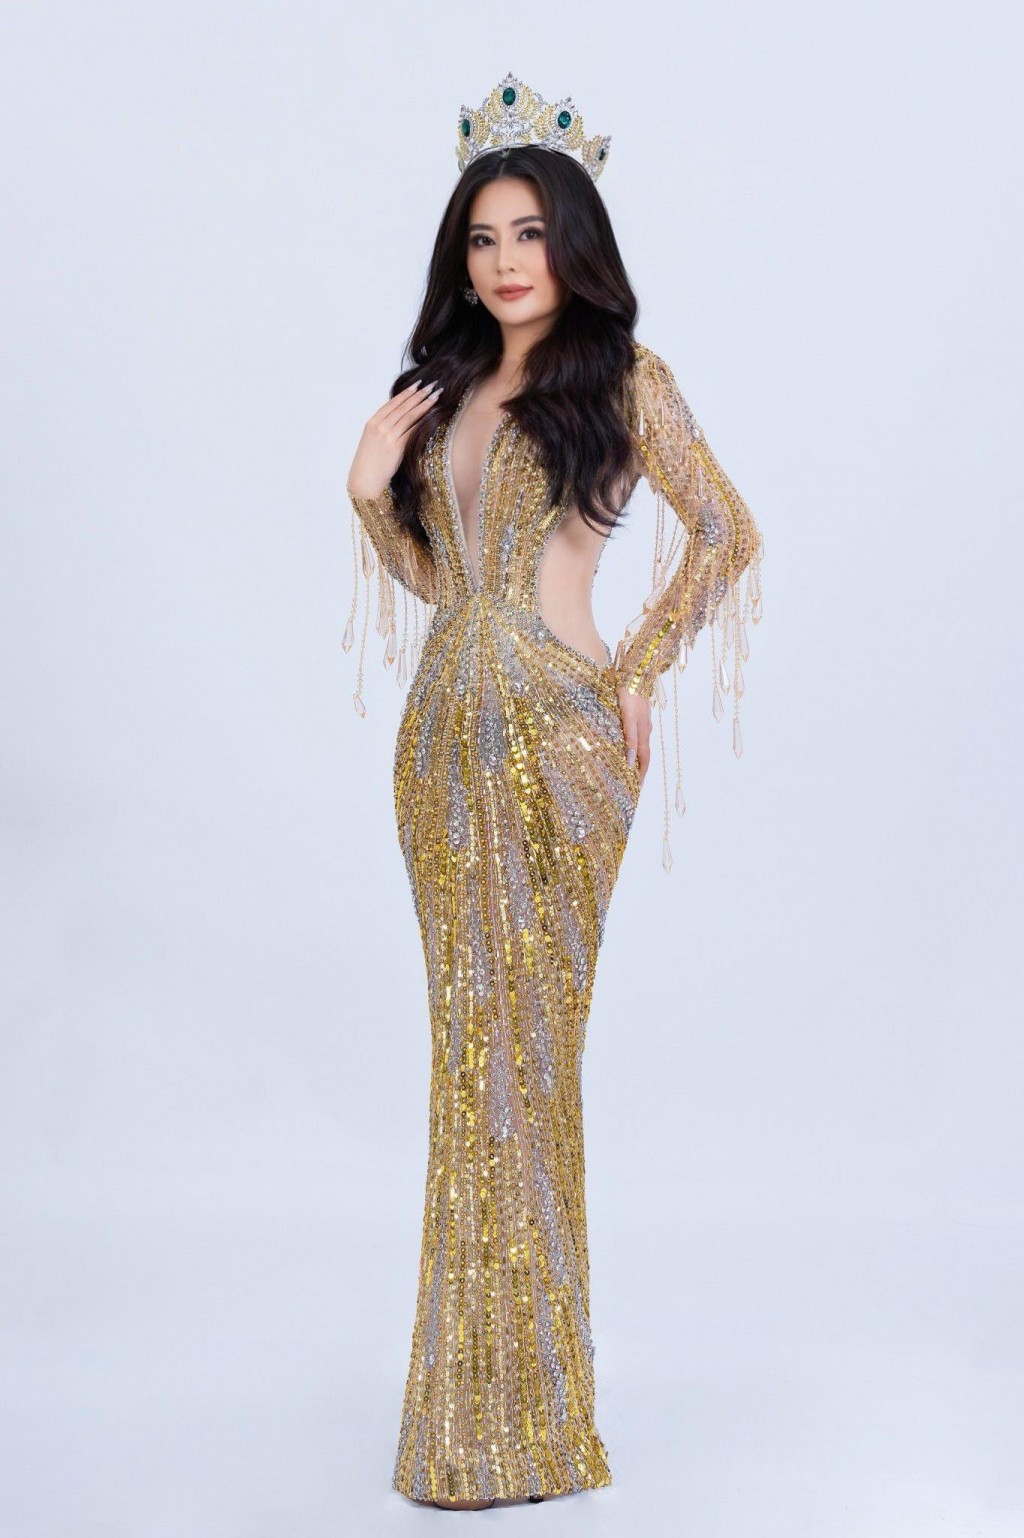 Hoa hậu Phan Kim Oanh làm chủ tịch Miss Multicultural